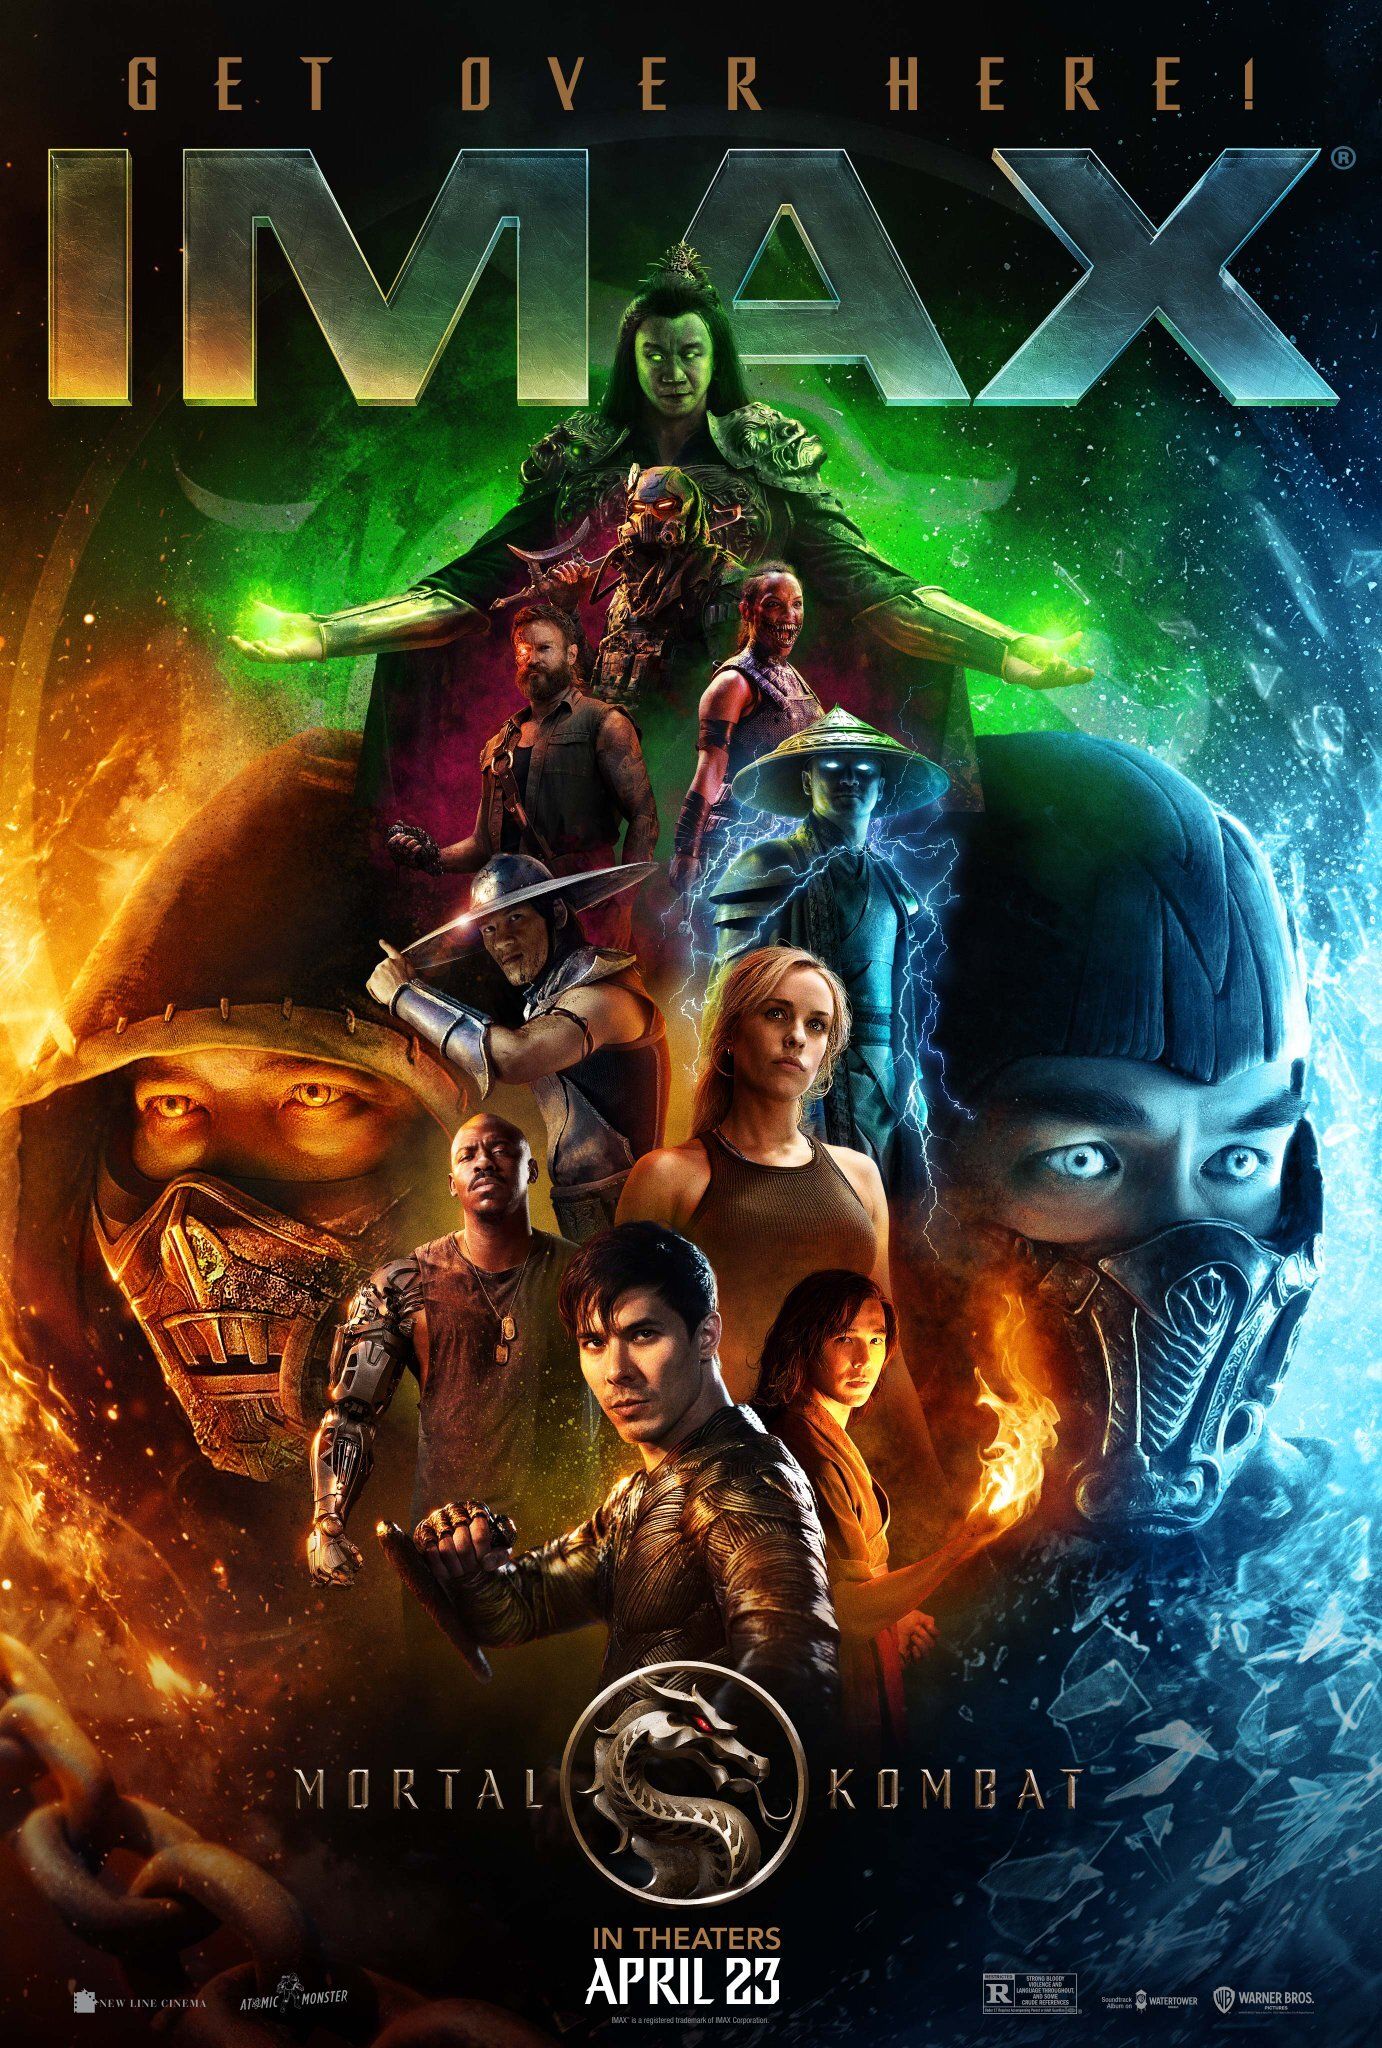 MORTAL KOMBAT IMAX Poster is Here!